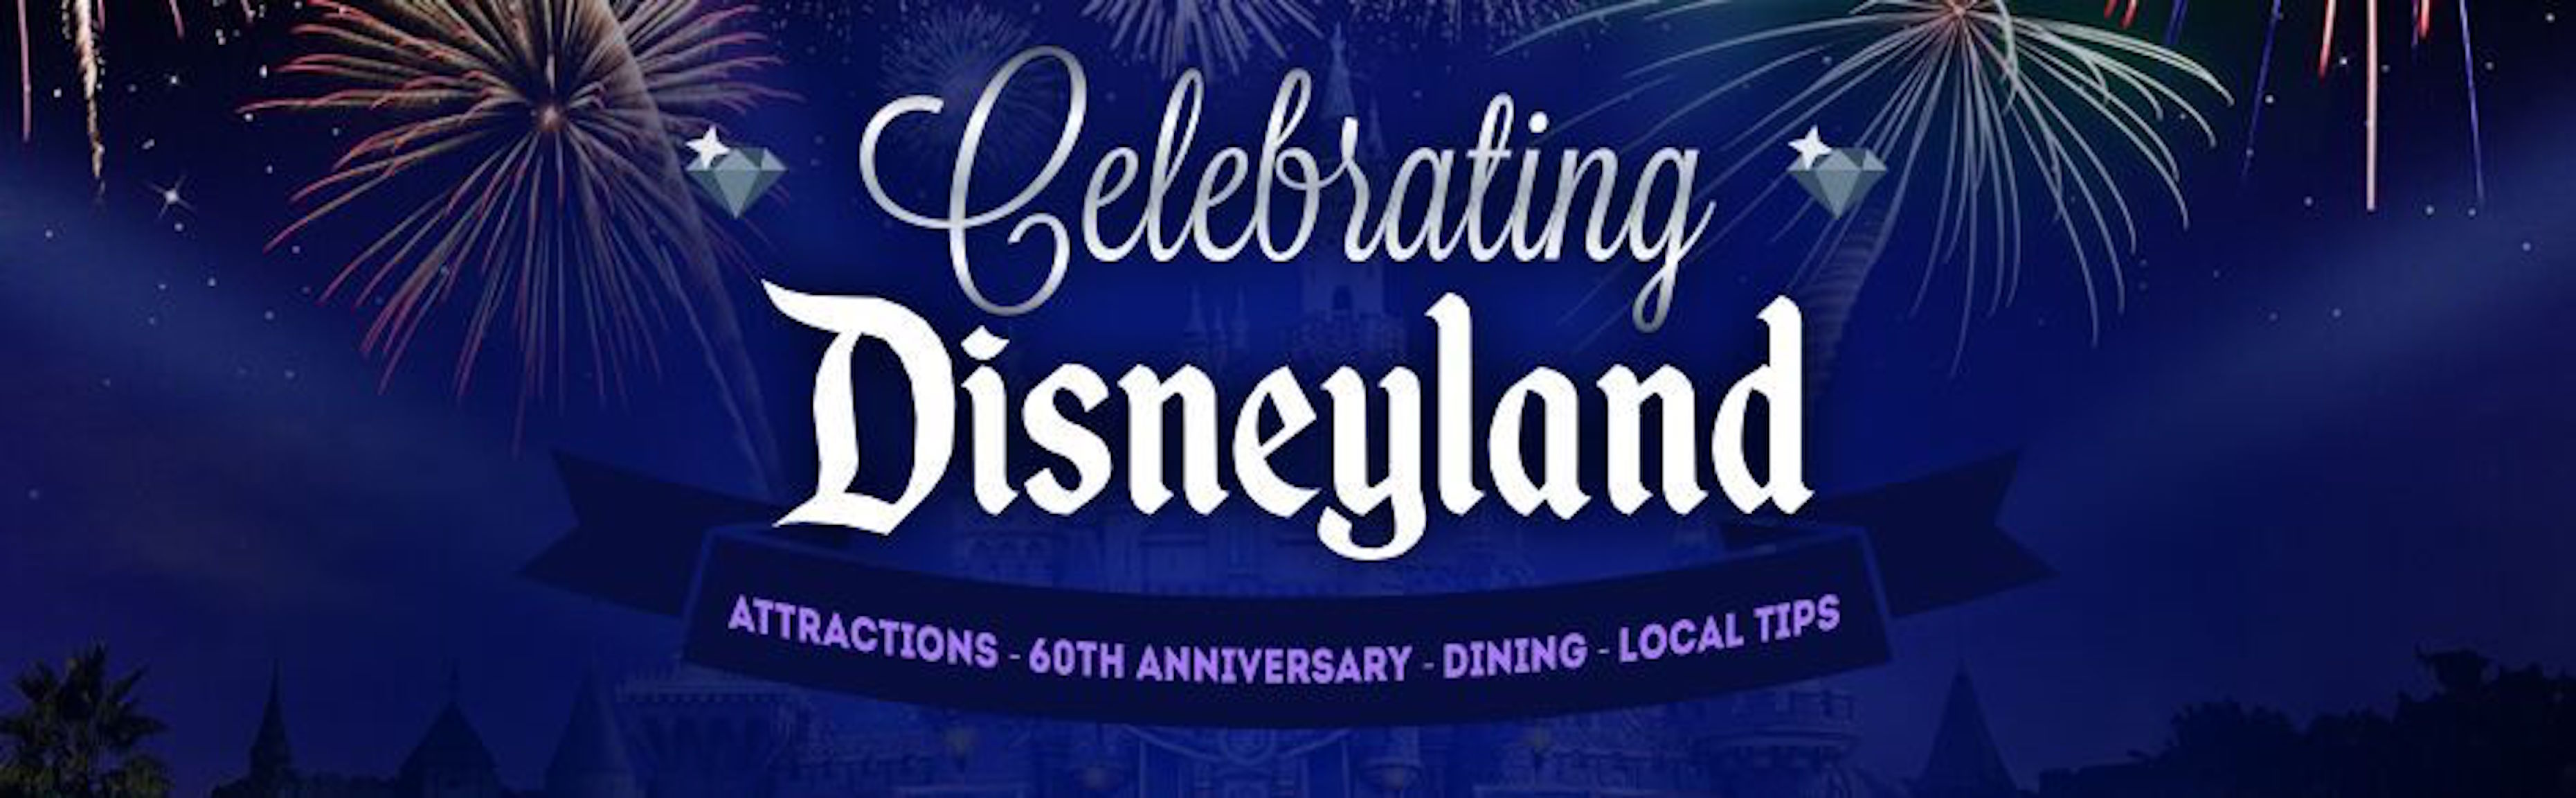 Celebrating Disneyland – 06/06/16 – Week 1 Trivia Contest & Show